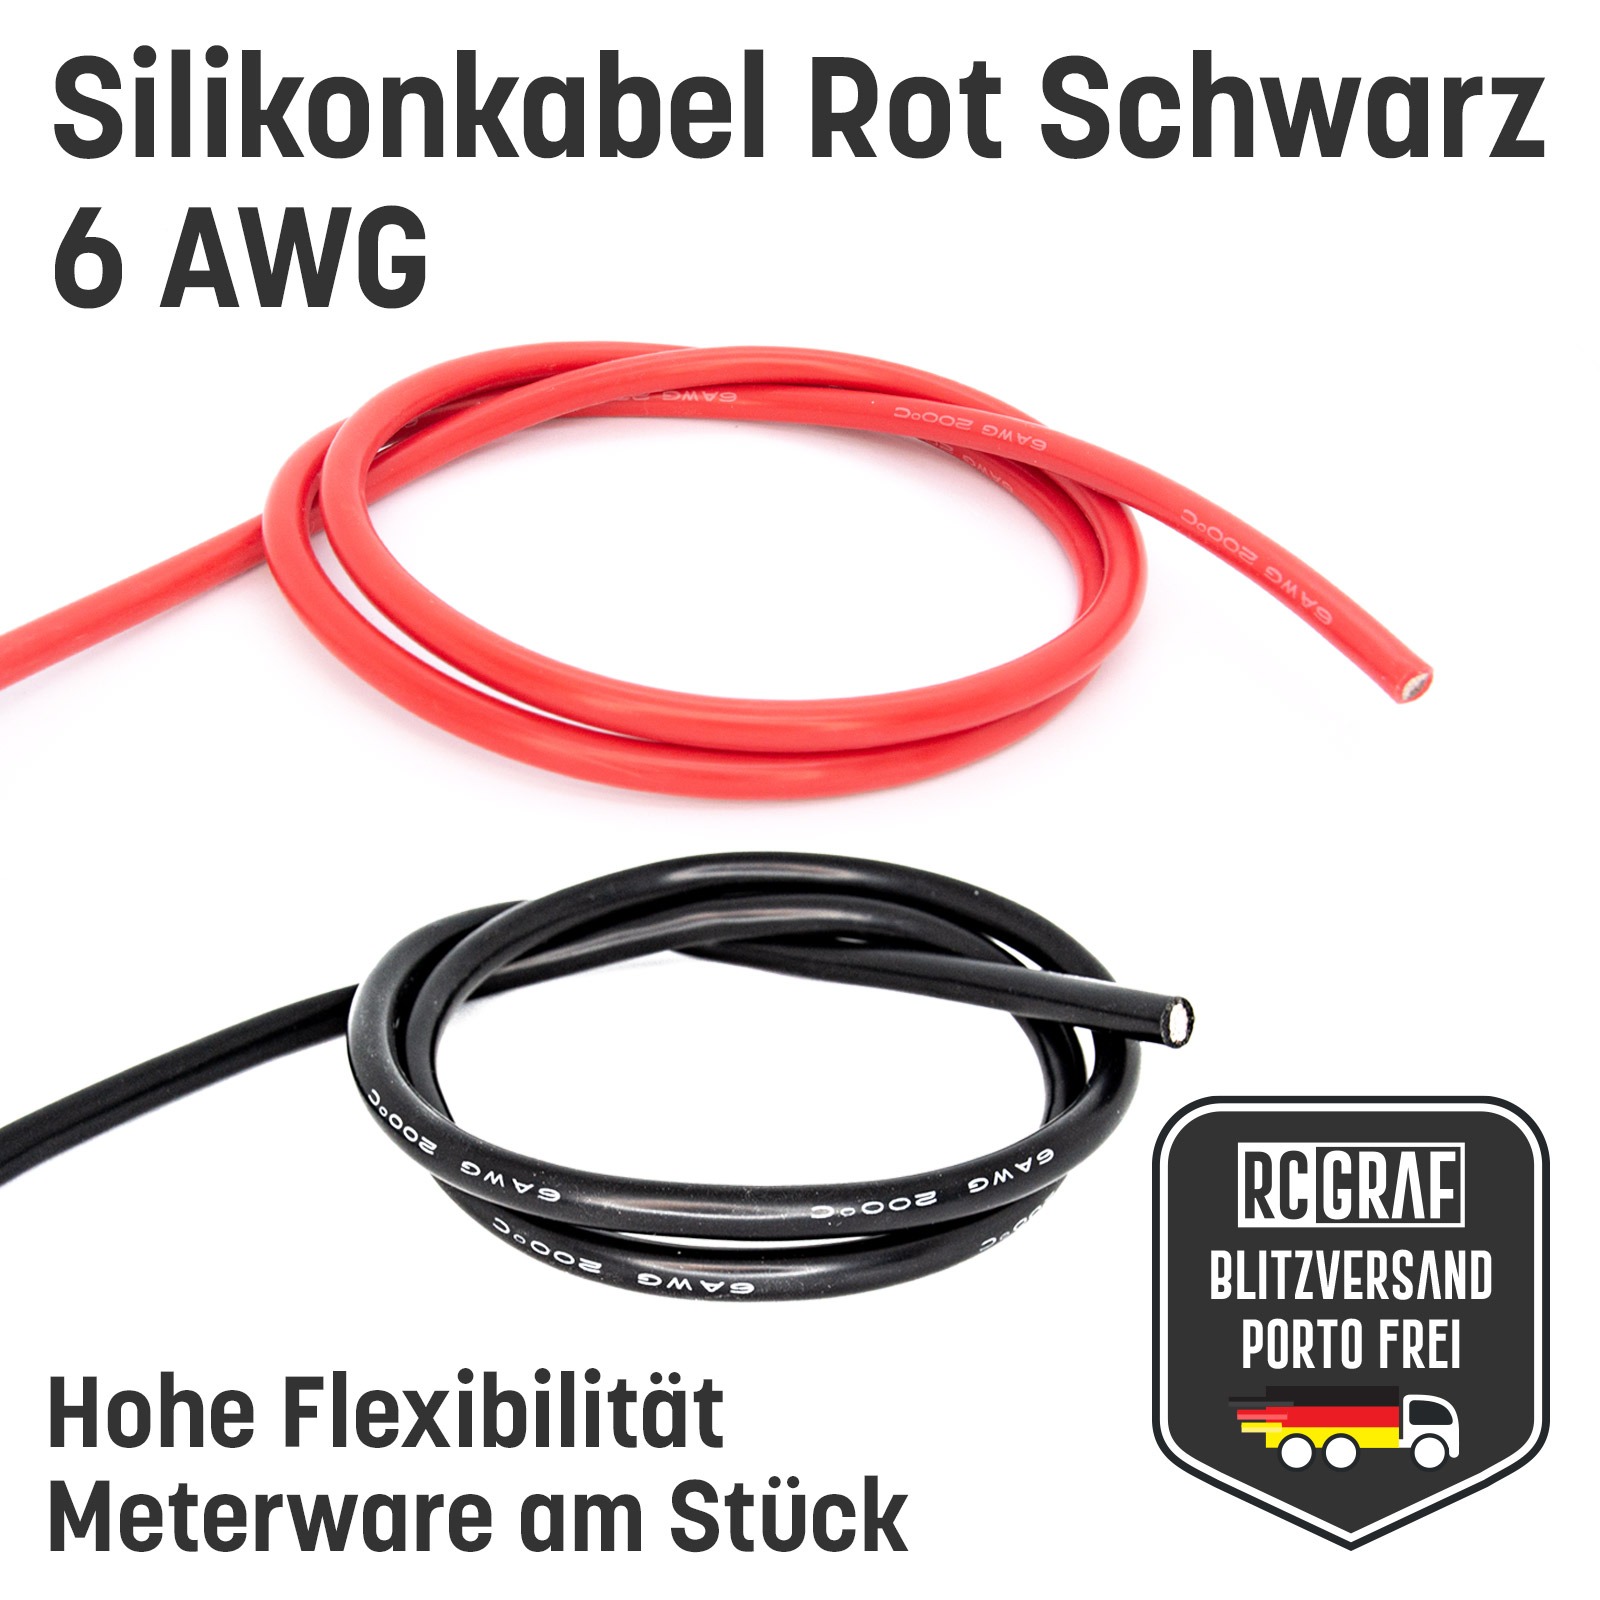 Silikonkabel 6 AWG hochflexibel Rot Schwarz Kupfer RC Kabel